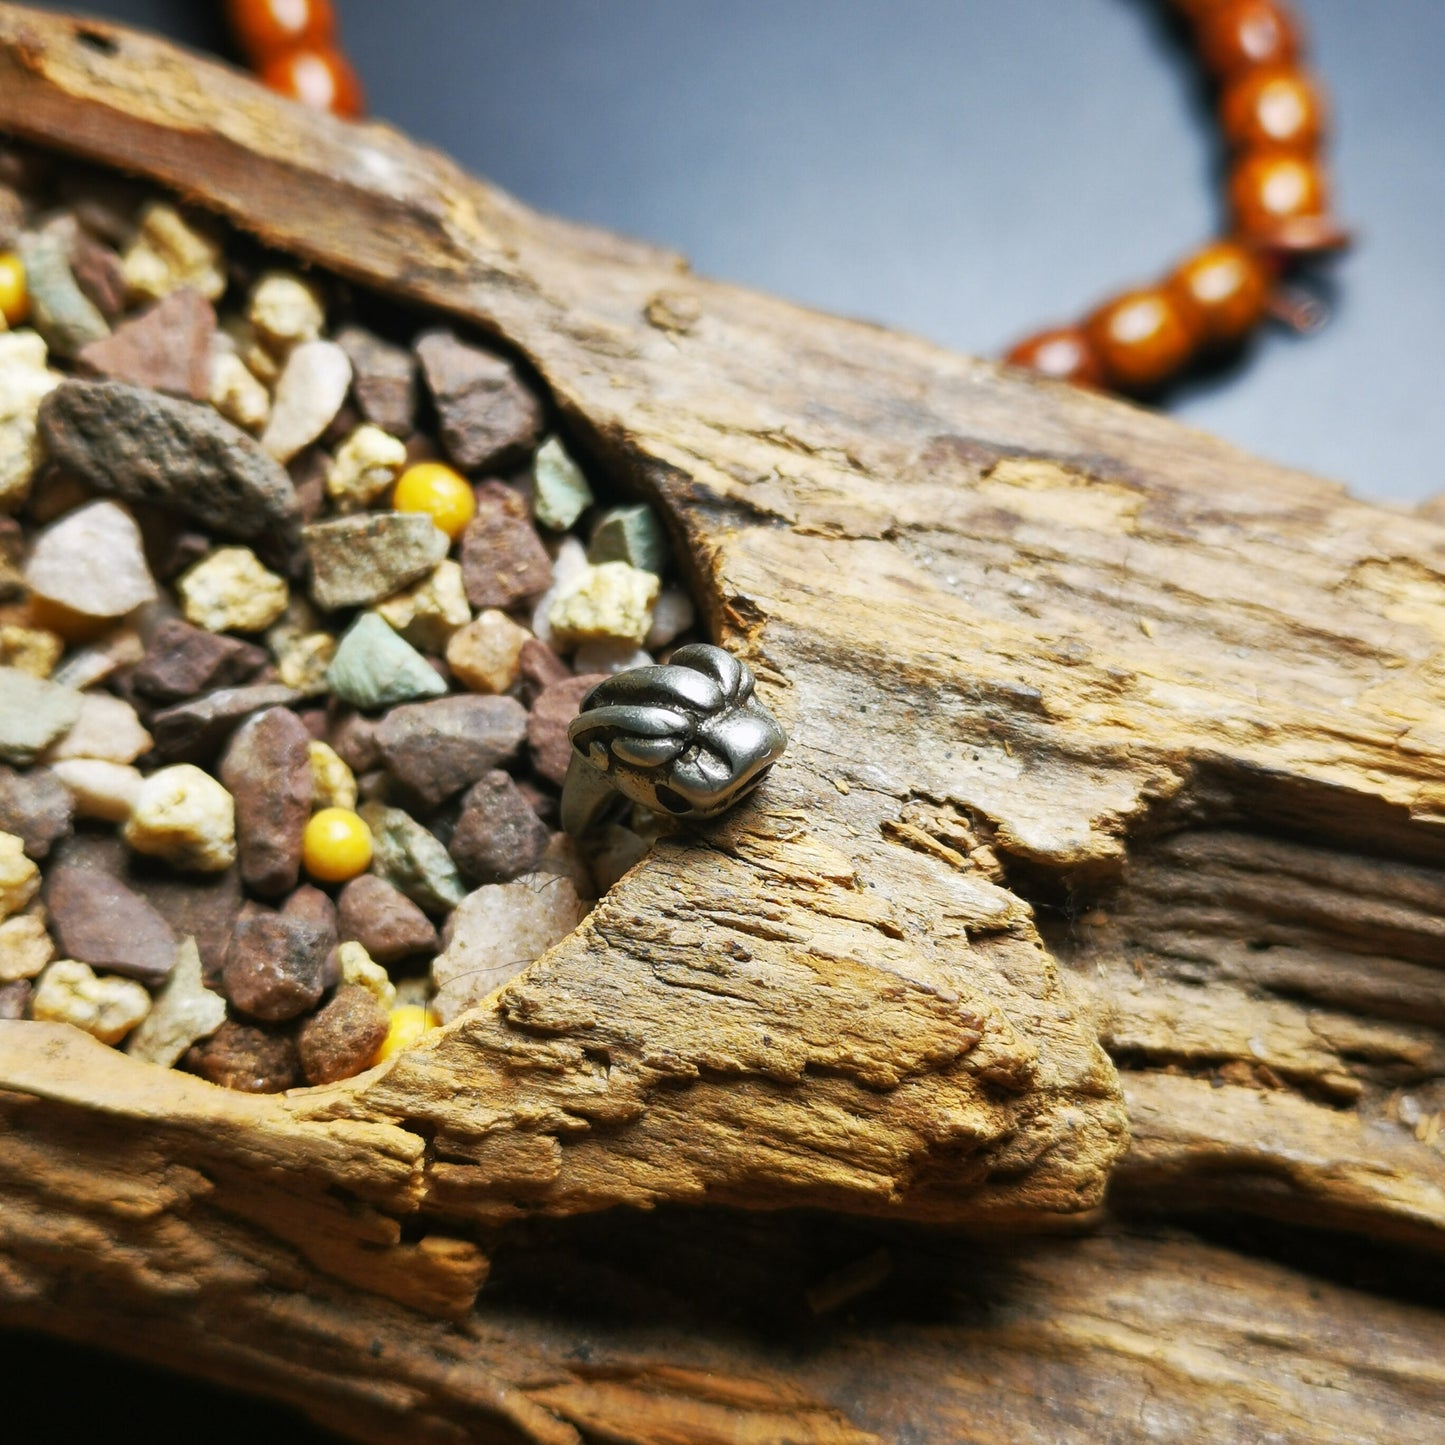 Gandhanra Handmade Dragon Mala Counter Pendant,OM Bead Amulet, Prayer Beads Accessories,Made of Cold Iron